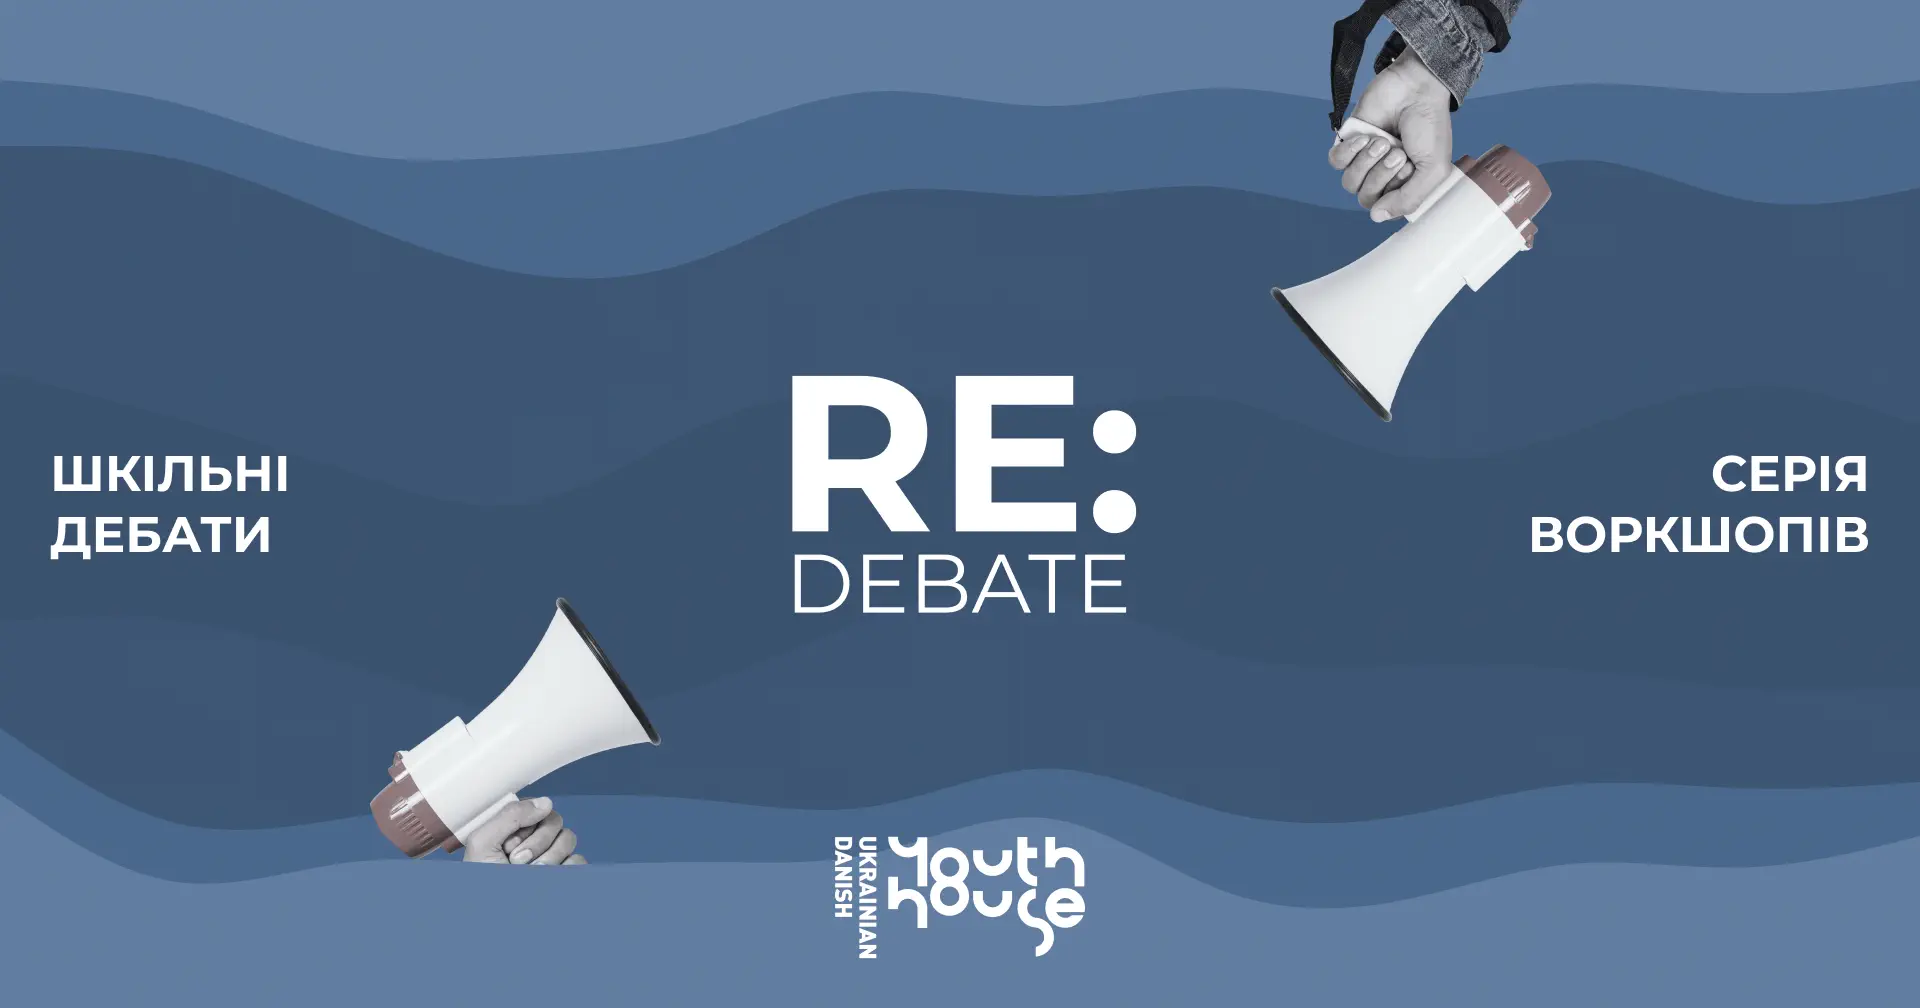 Re:debate: registration for a series of debate workshops for schoolchildren is opened